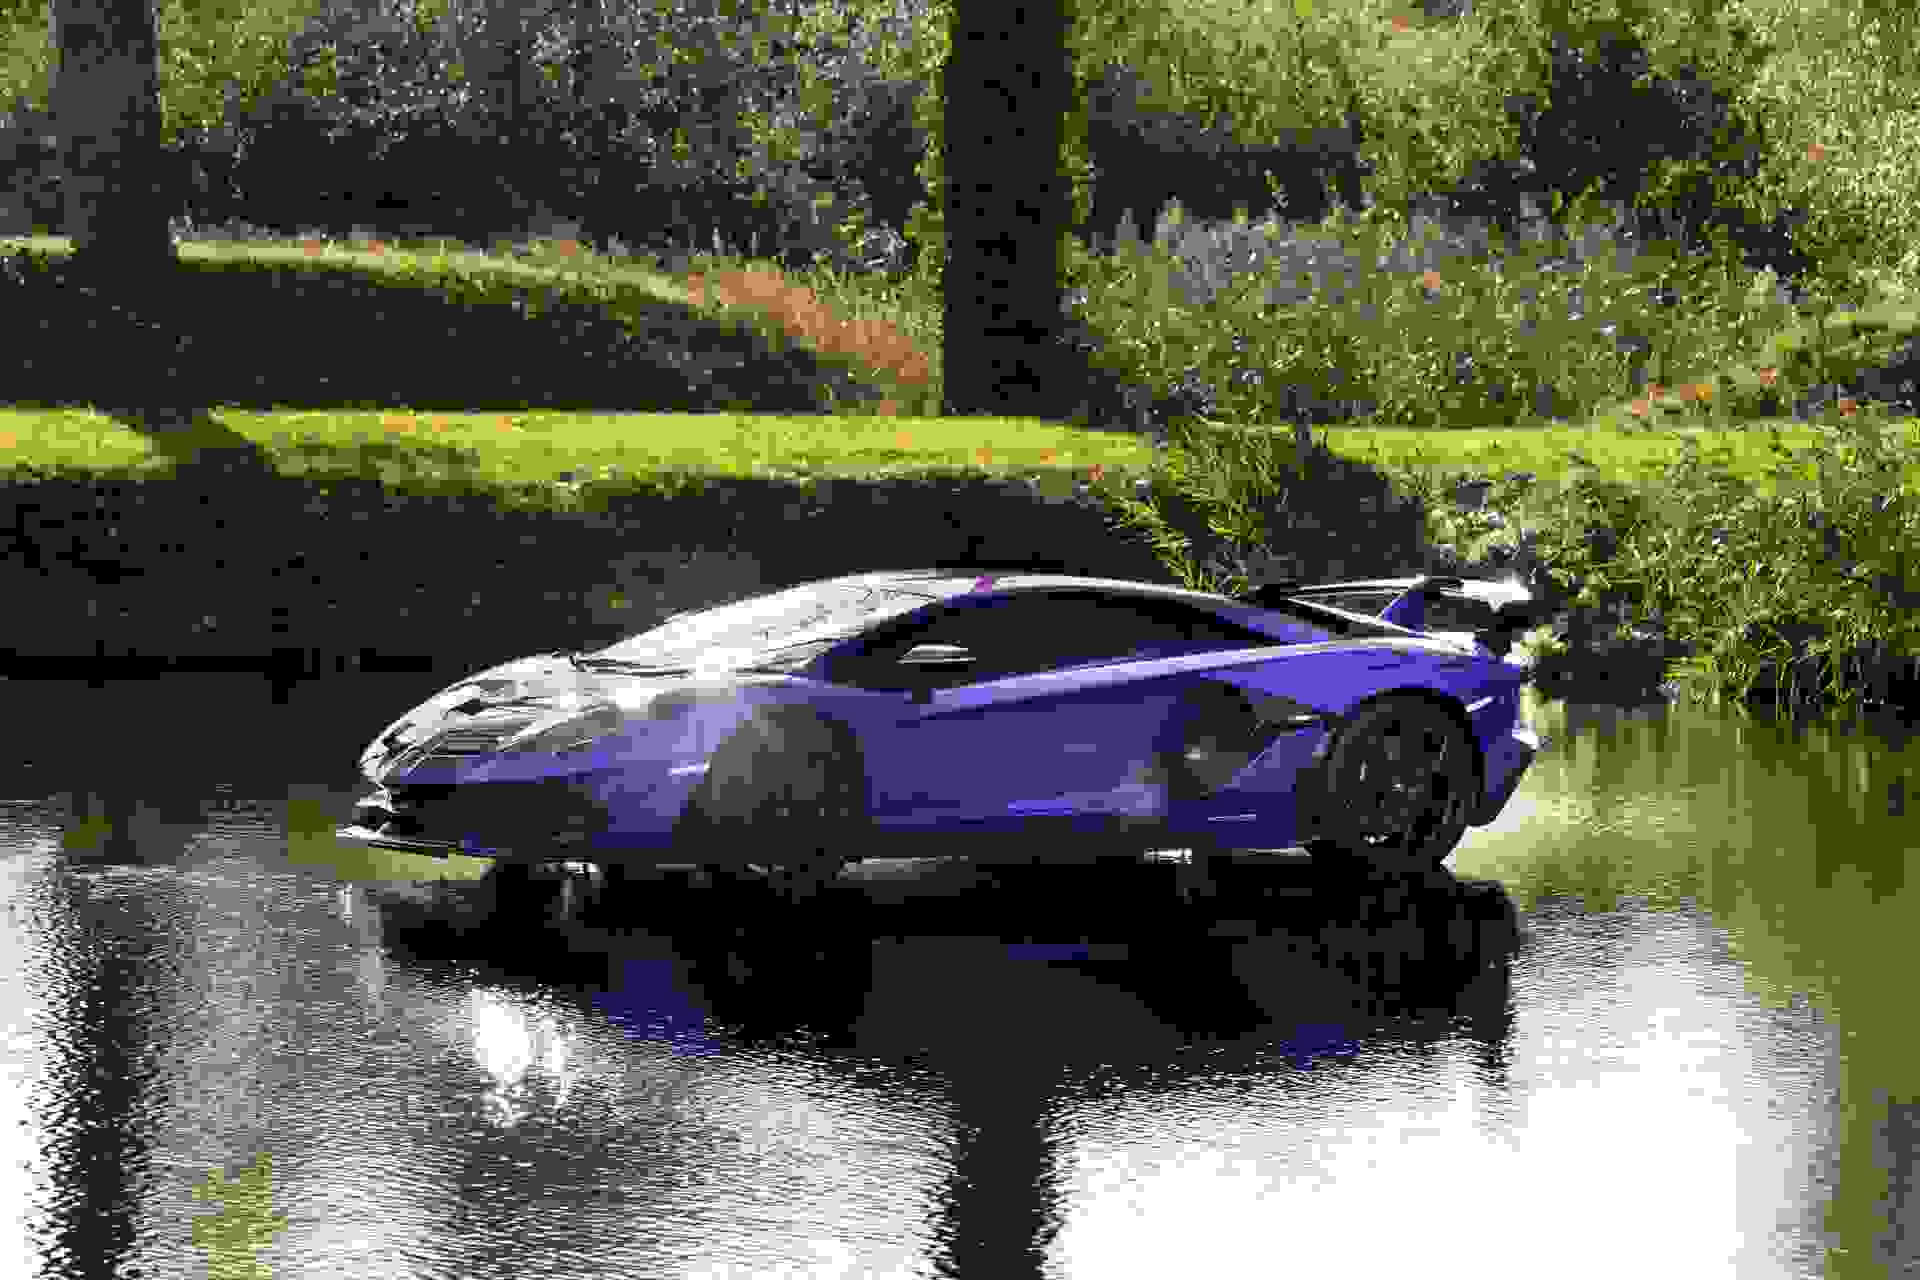 Lamborghini AVENTADOR Photo 98e8bc8b-6066-451d-86df-59744270ab9d.jpg